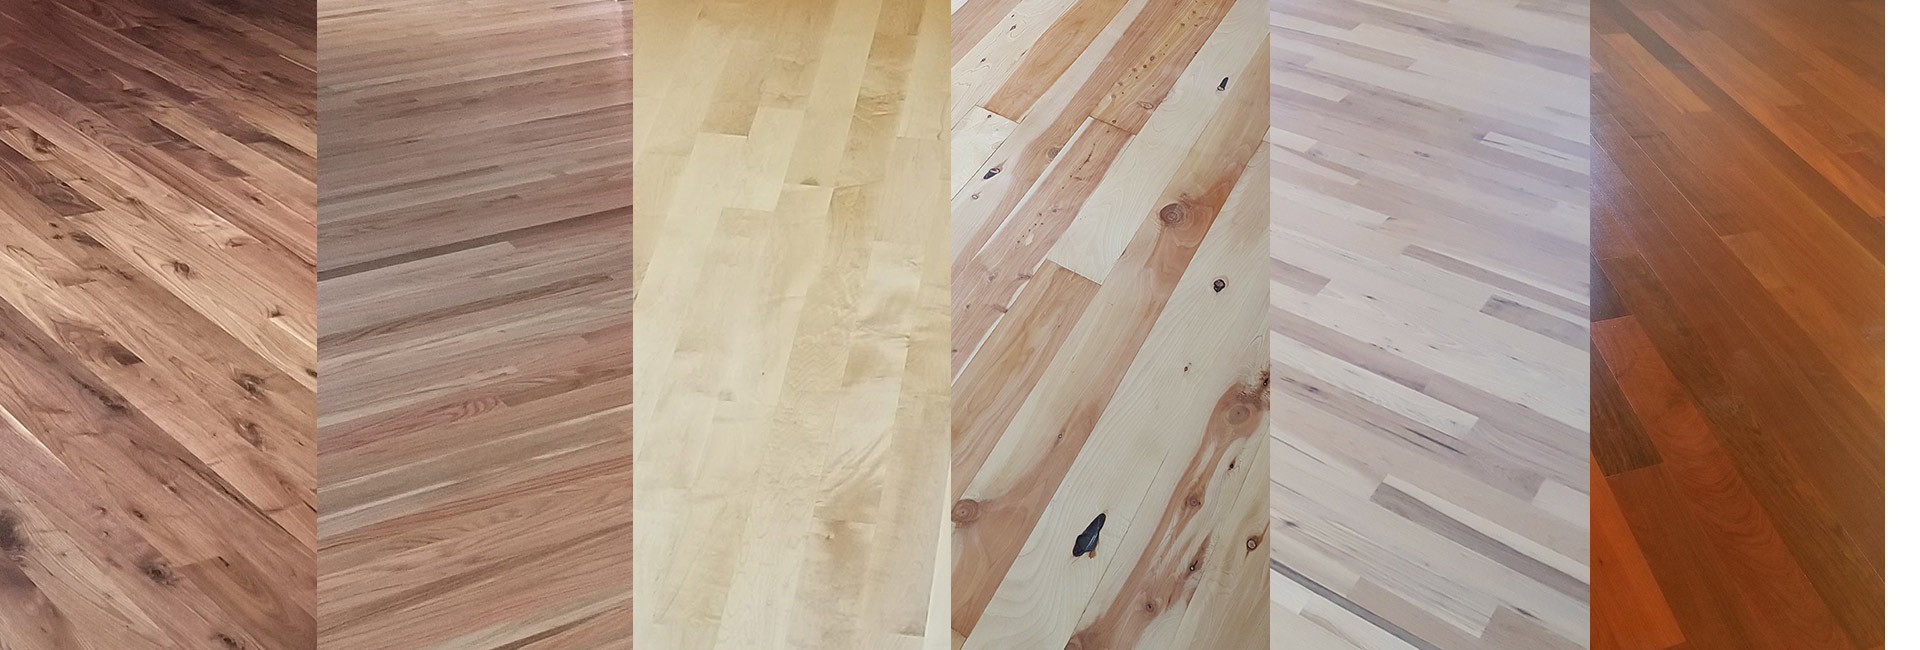 Custom Hardwood Flooring Refinishing, Idaho Hardwood Flooring Boise Id